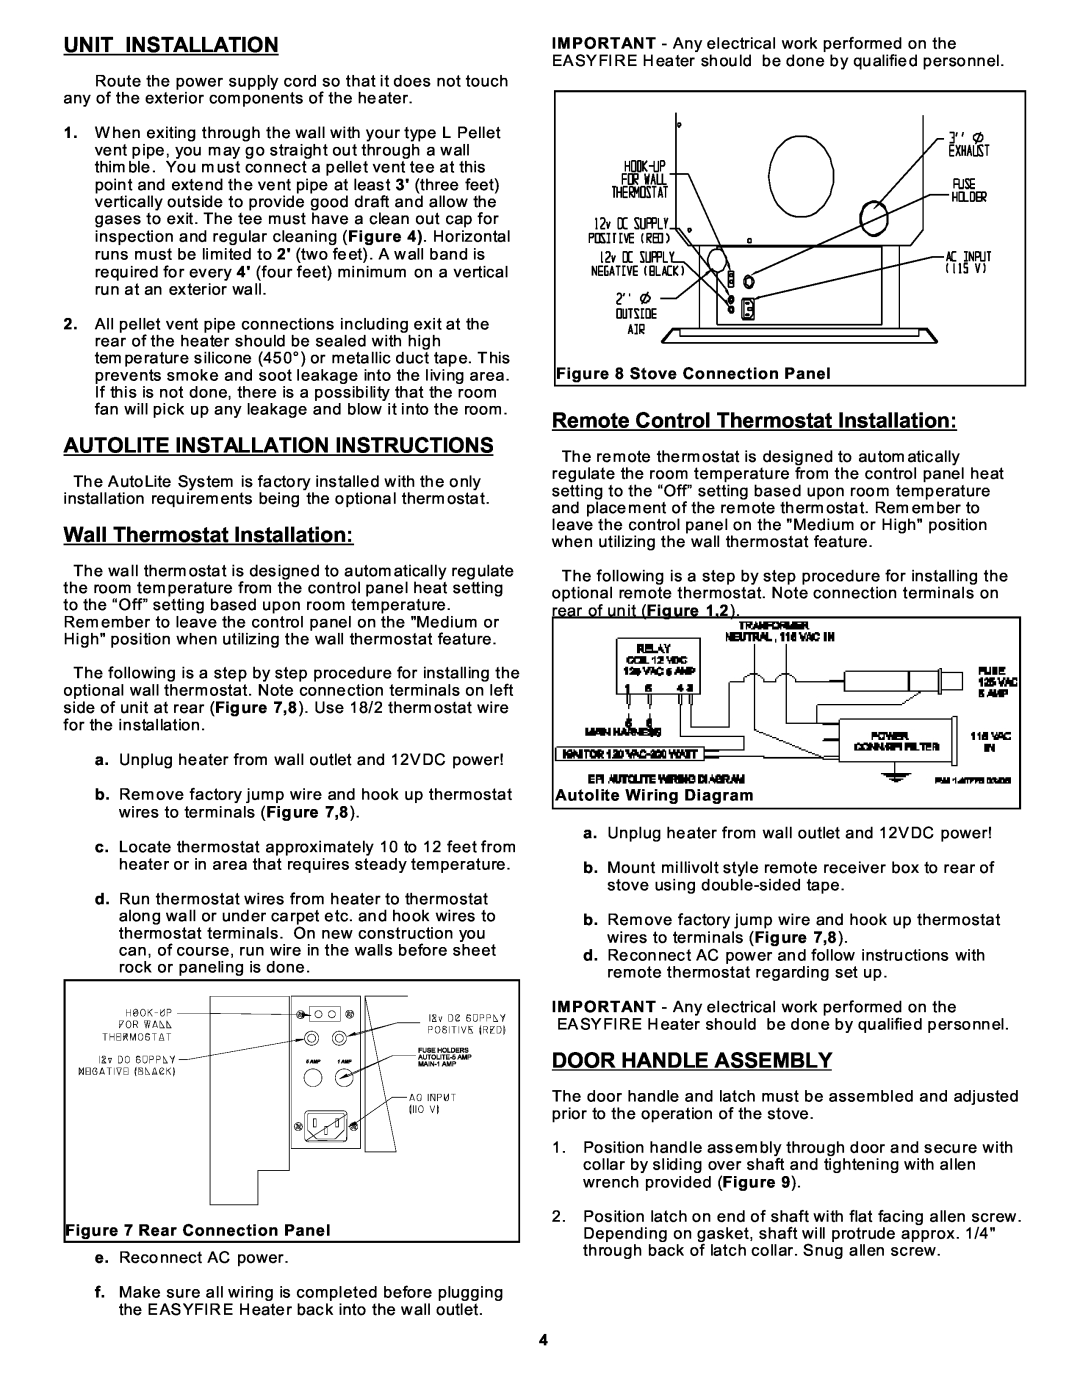 Sierra Products EF-3801B-AL Unit Installation, Autolite Installation Instructions, Wall Thermostat Installation 